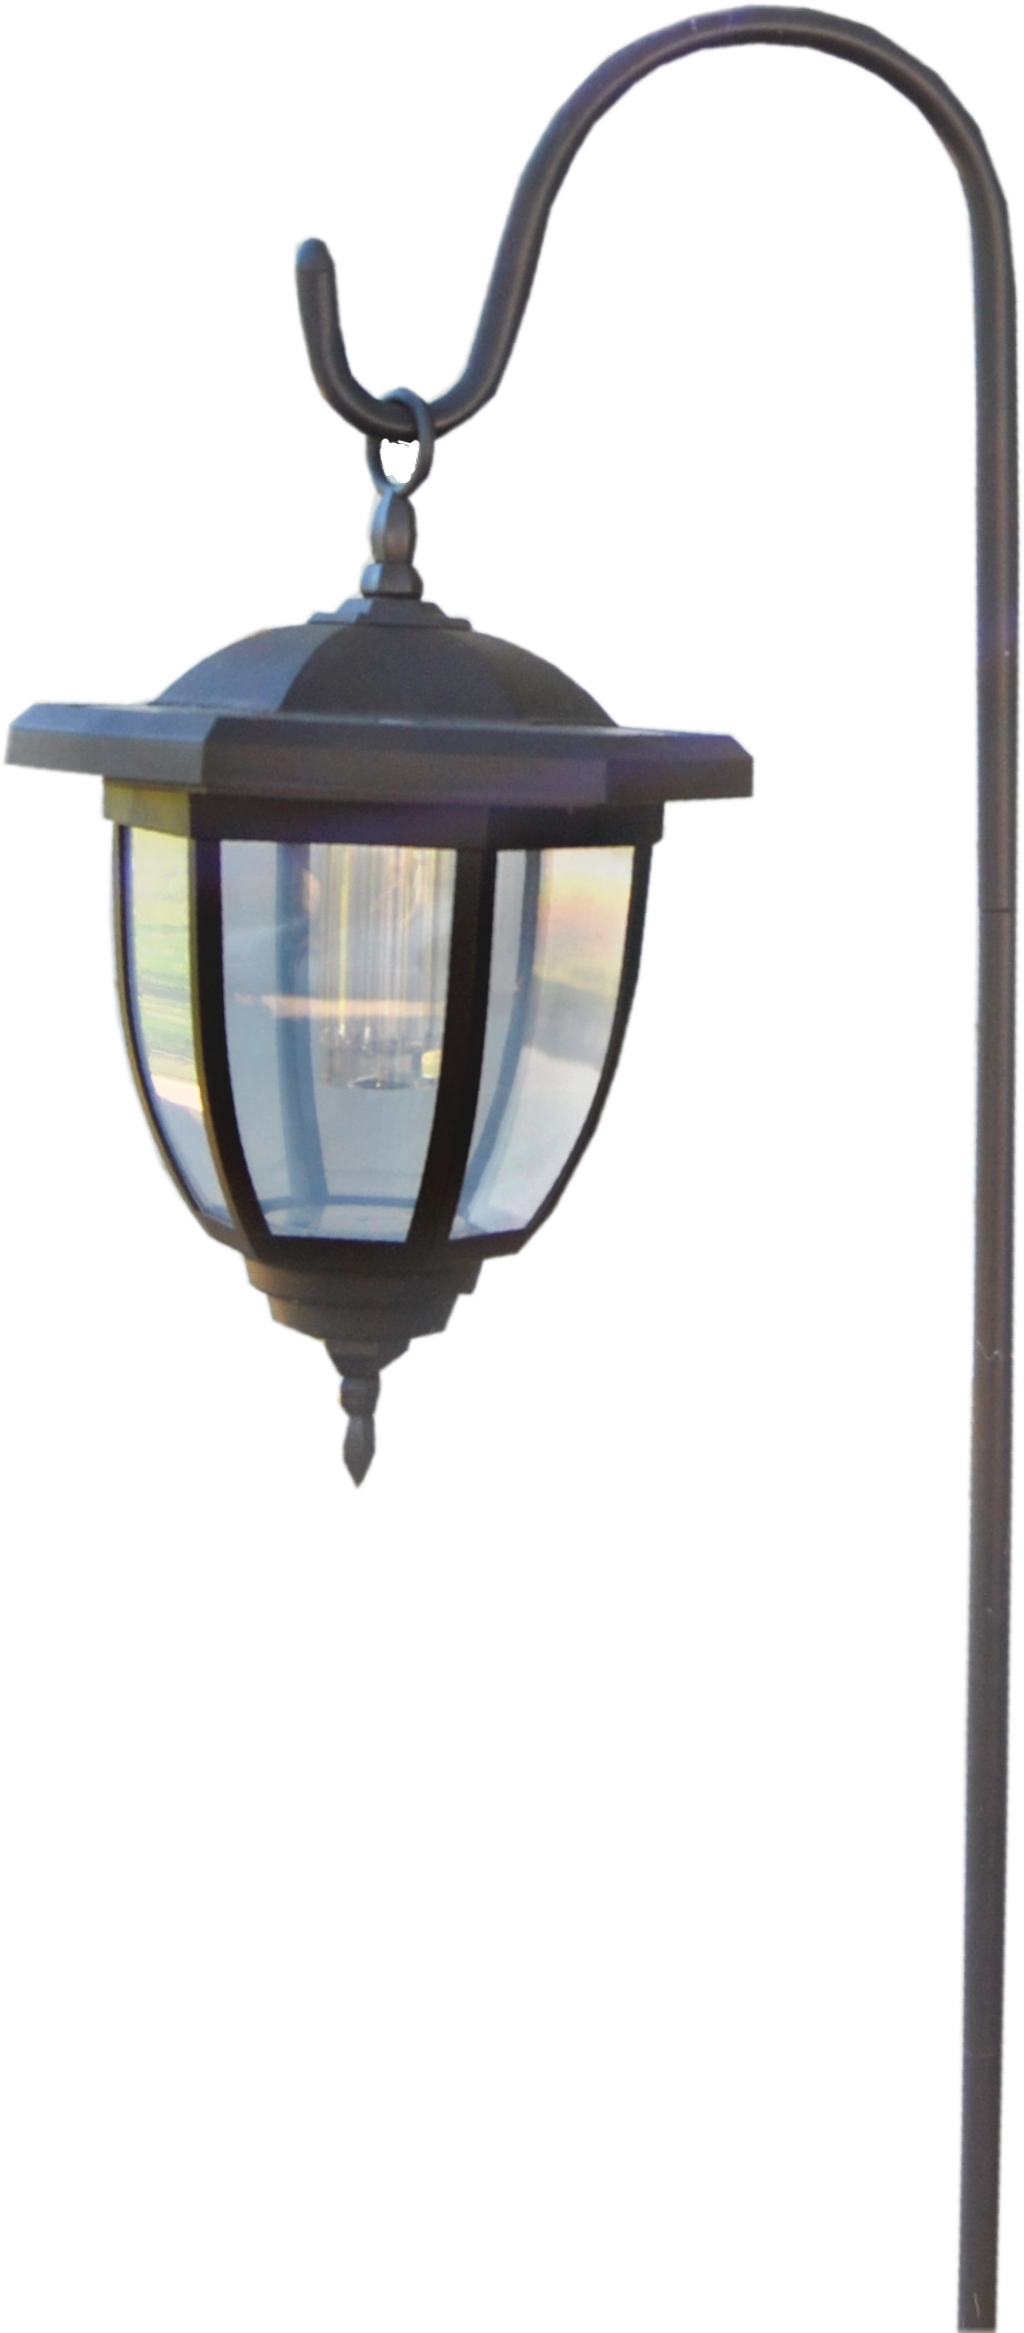 Download #lantern #light #lighting #ironrod #pole #styling